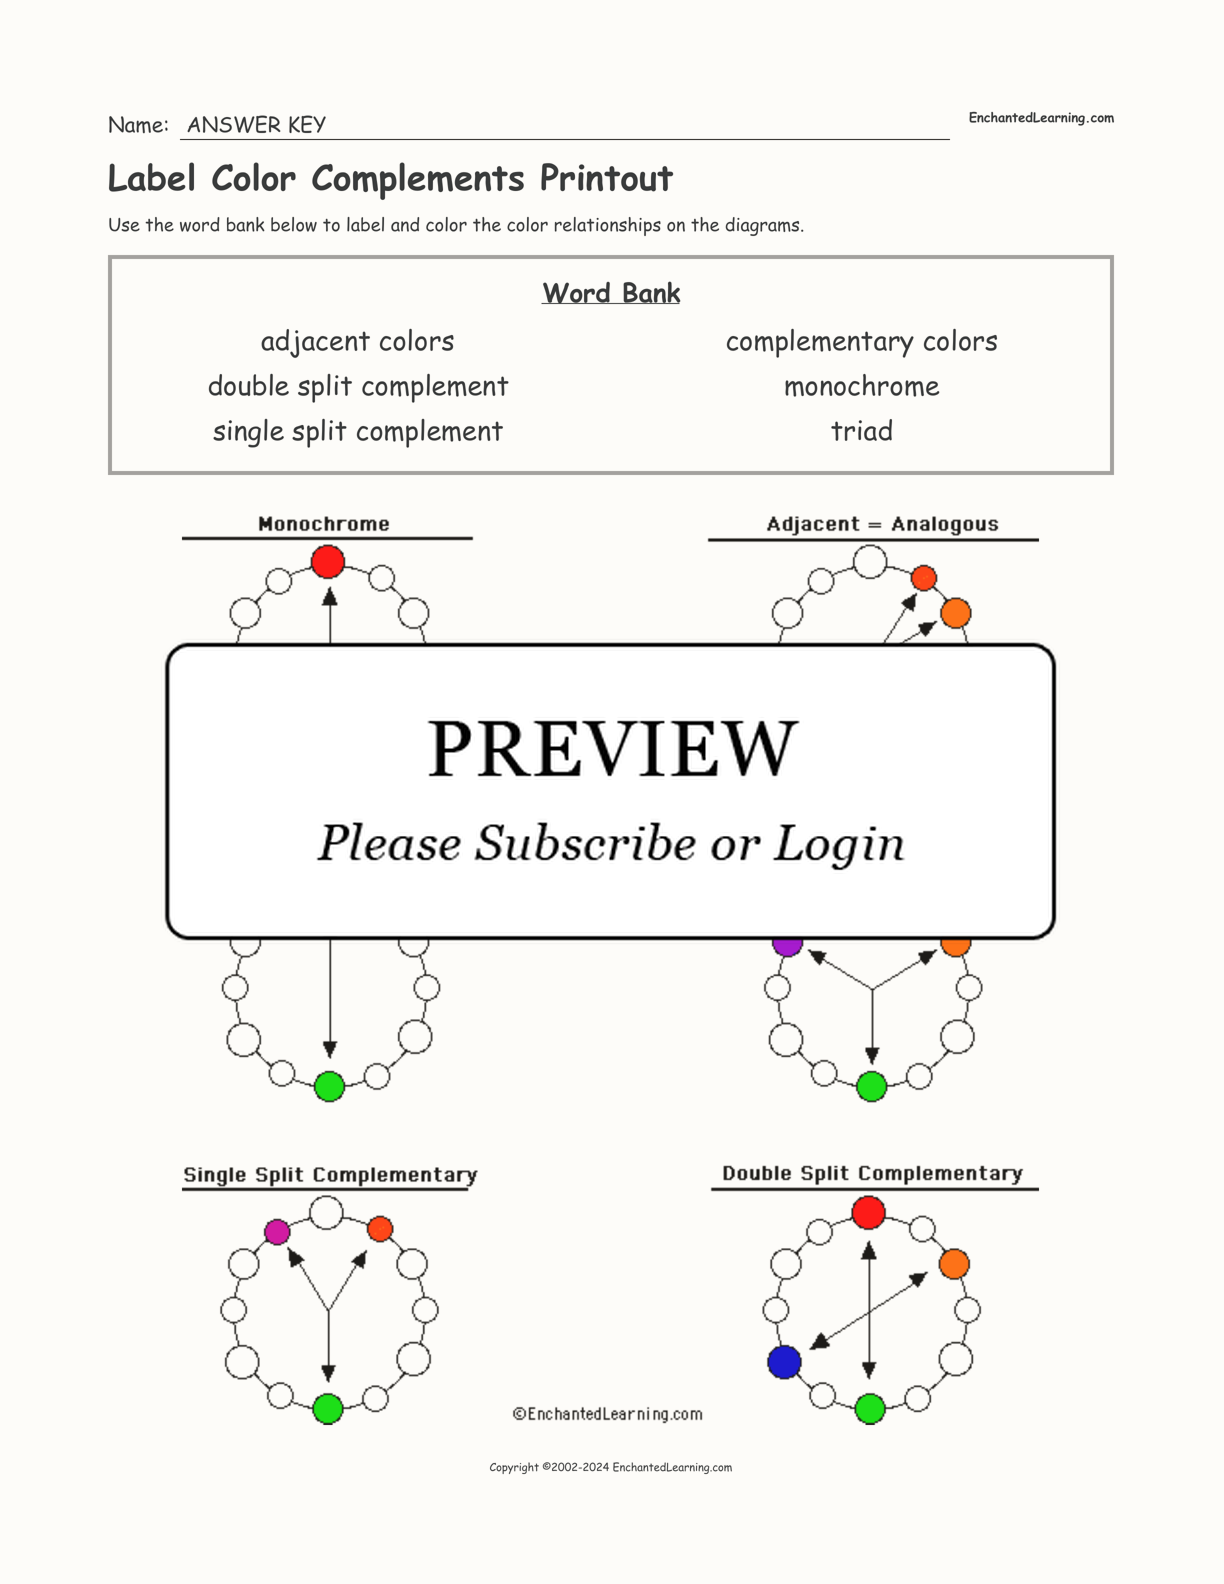 Label Color Complements Printout interactive worksheet page 2